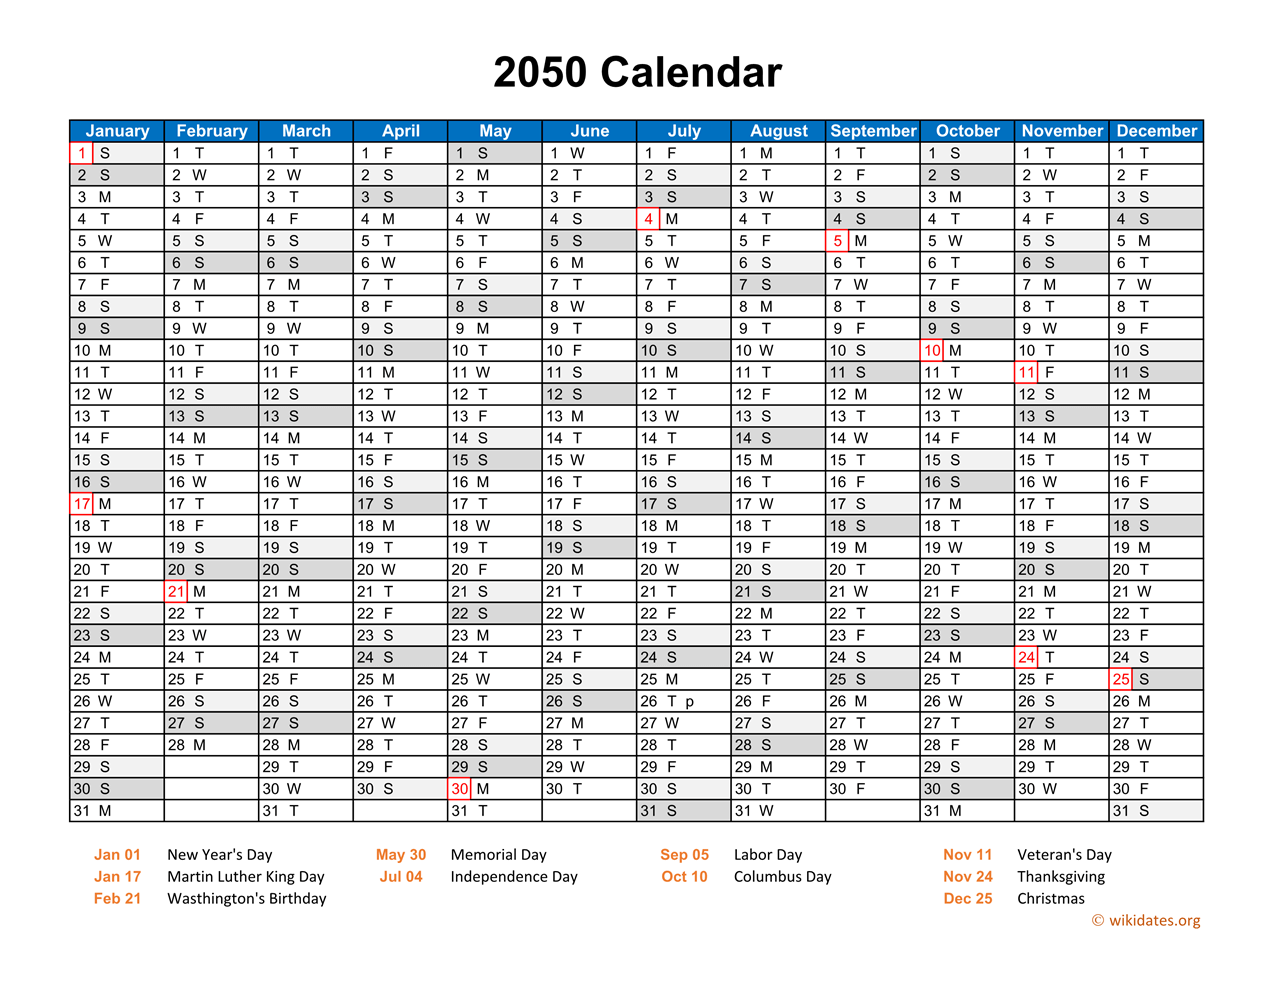 2050-calendar-horizontal-one-page-wikidates